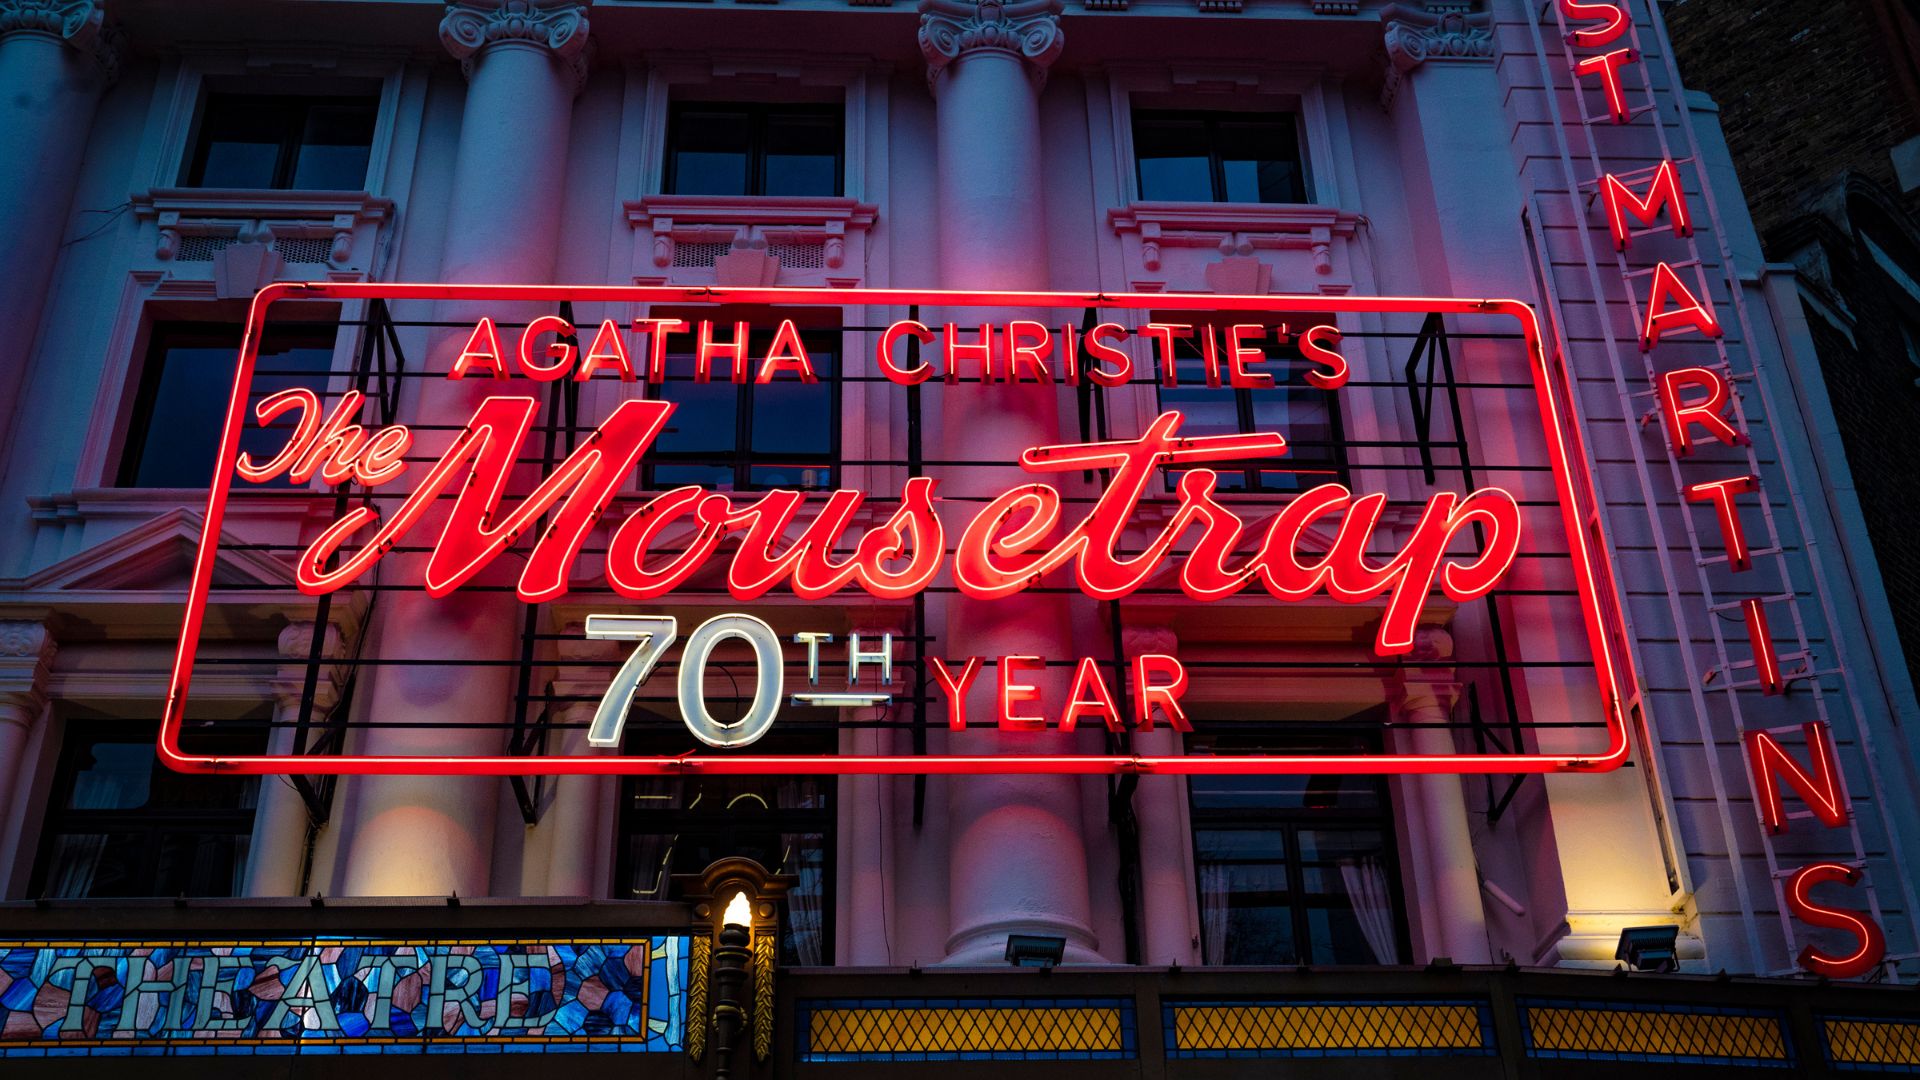 The Mousetrap by Agatha Christie - Agatha Christie